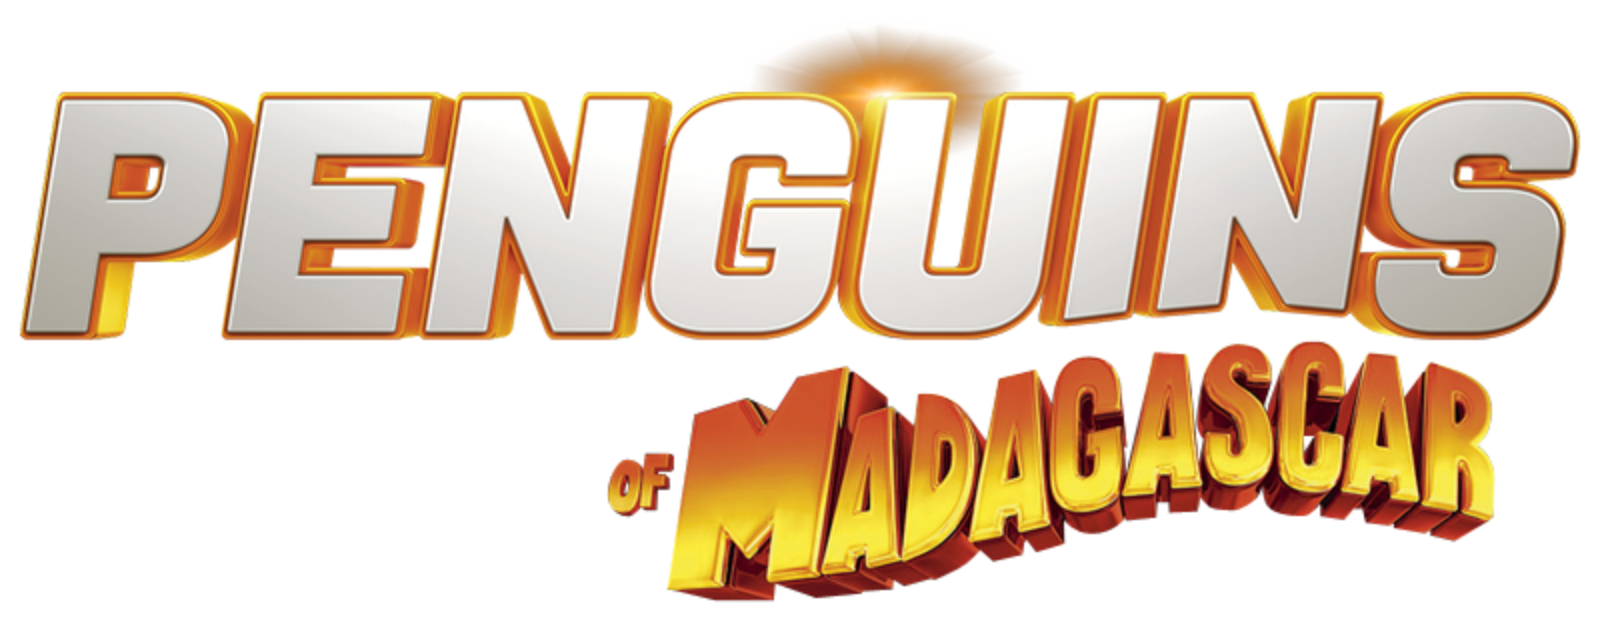 The Penguins of Madagascar Complete (7 DVDs Box Set)